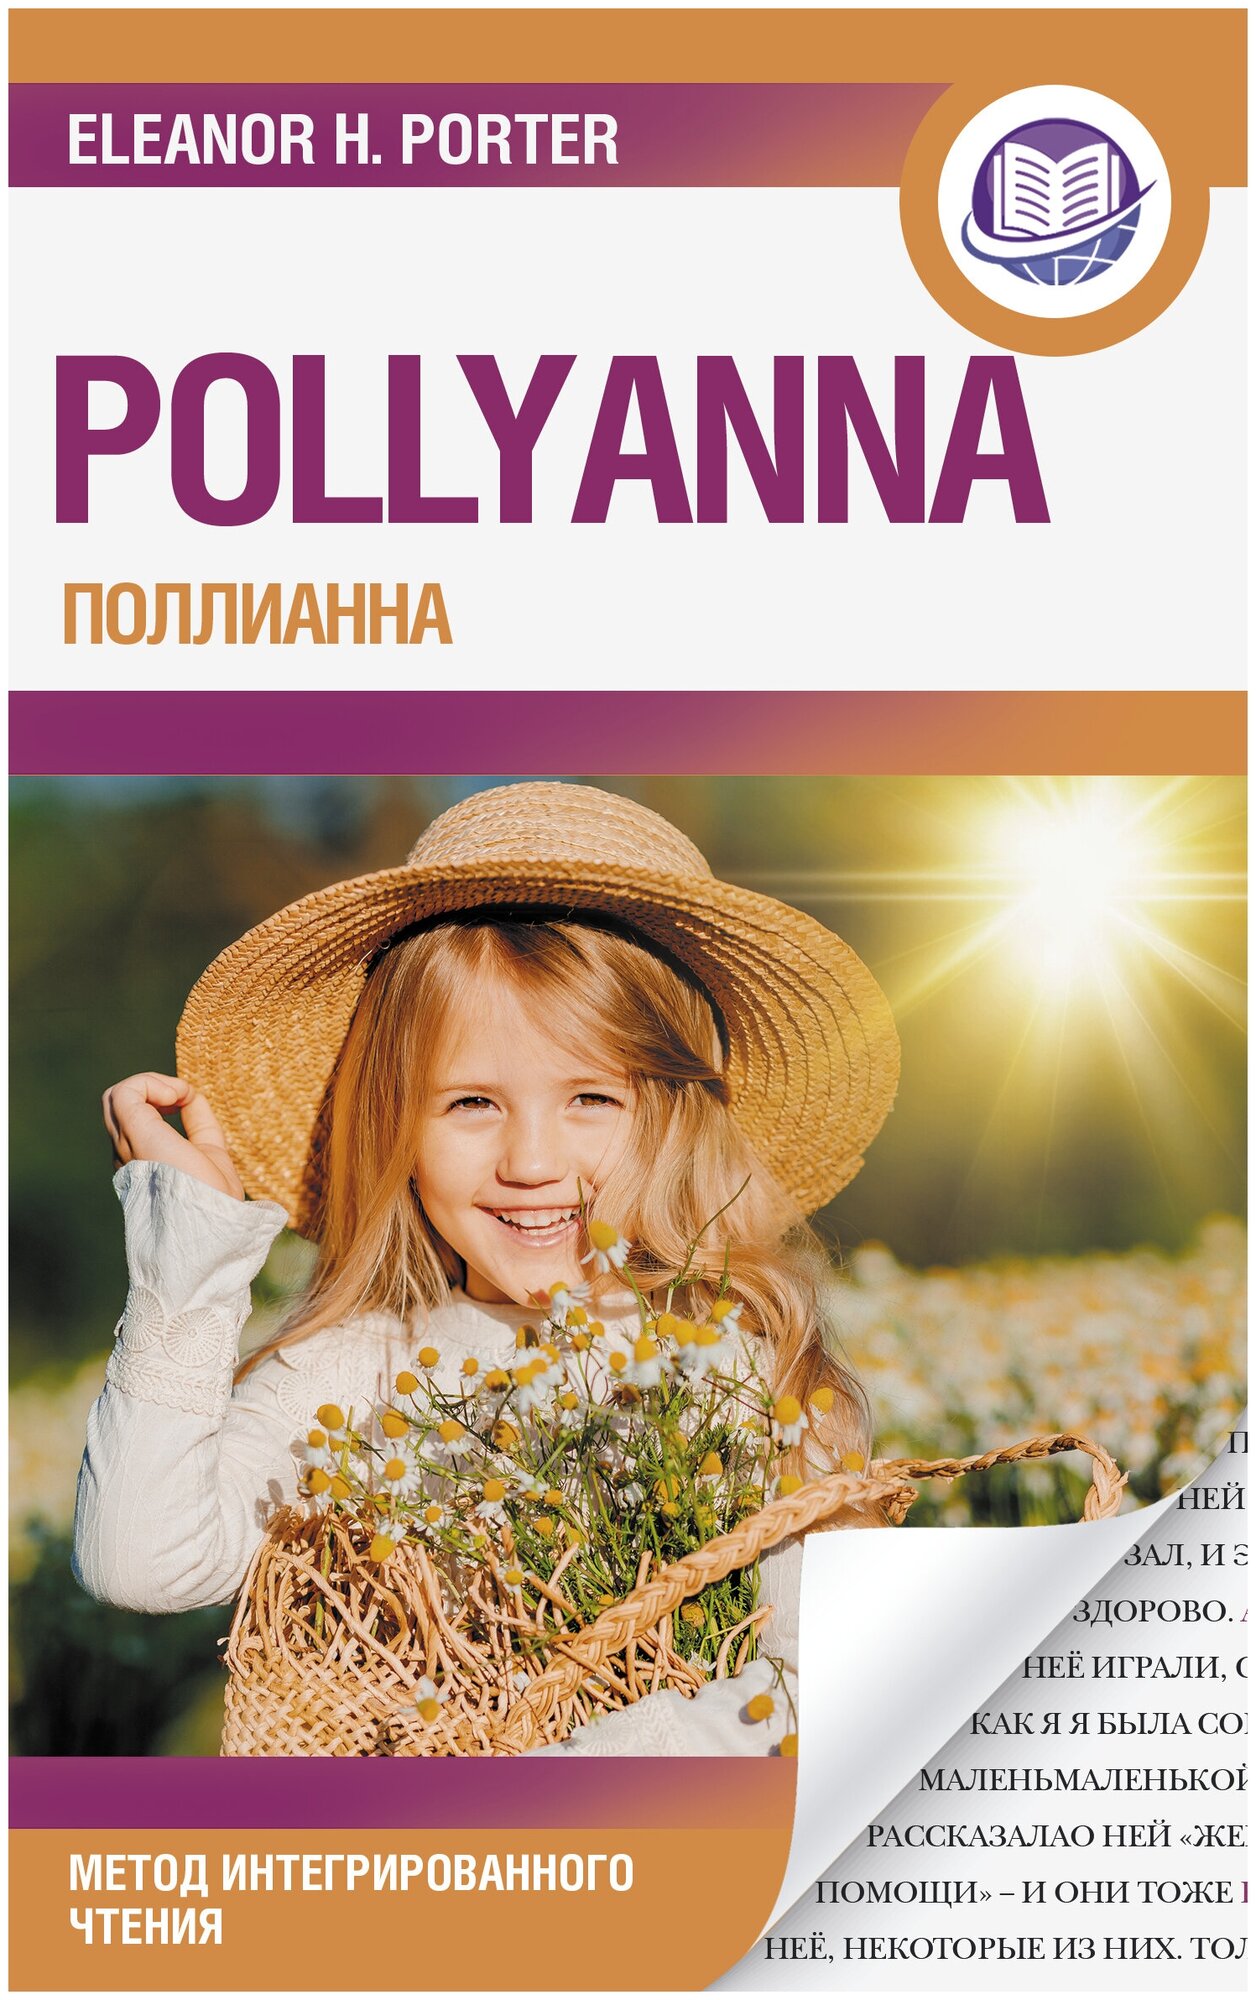 Поллианна = Pollyanna (Портер Элинор) - фото №1